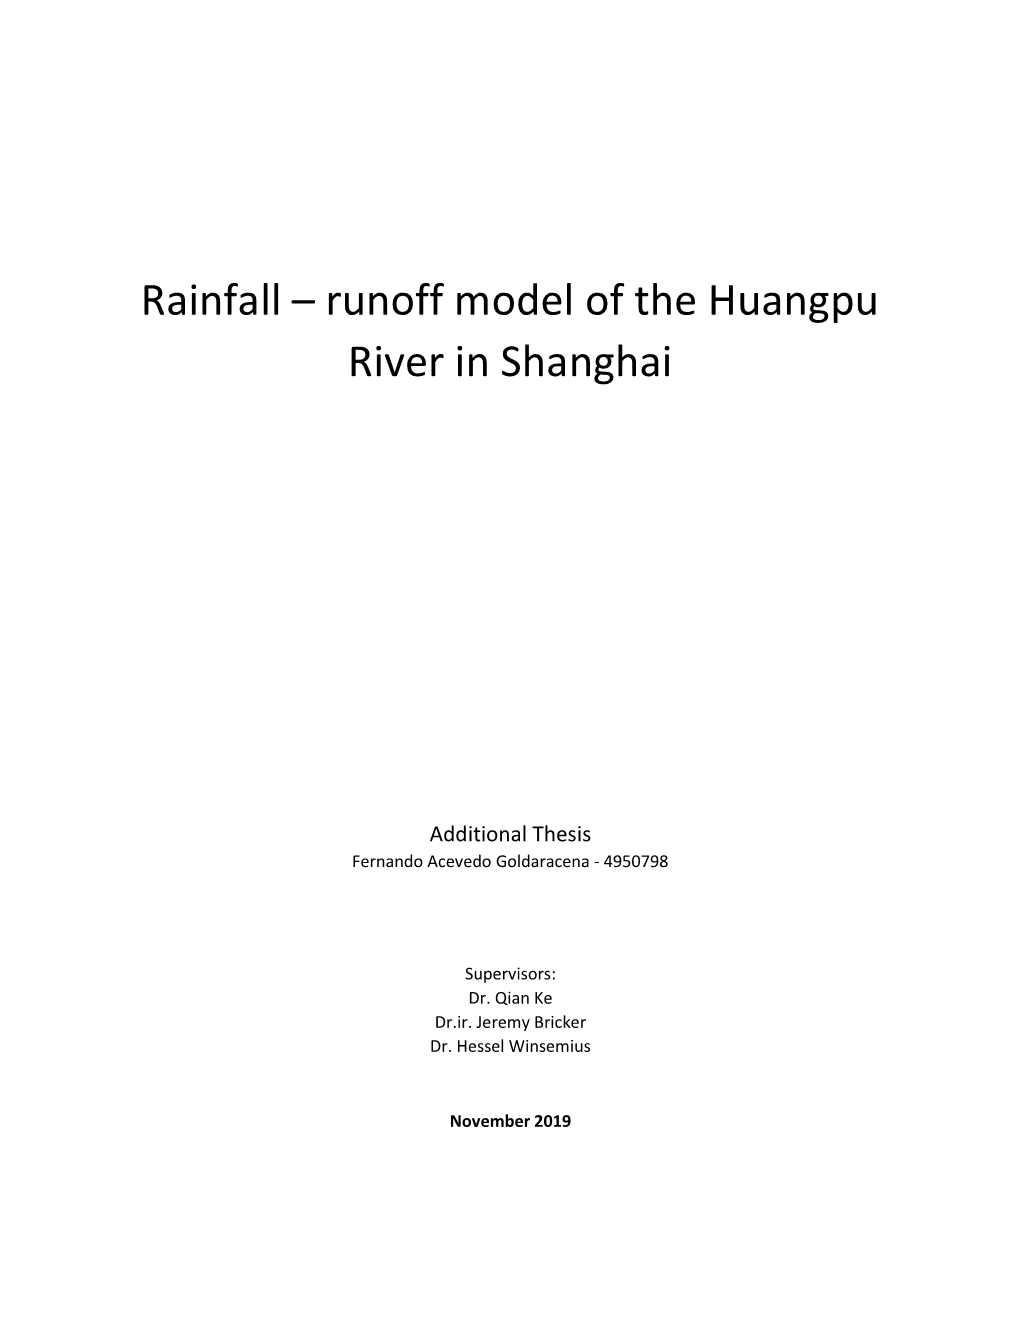 Rainfall – Runoff Model of the Huangpu River in Shanghai